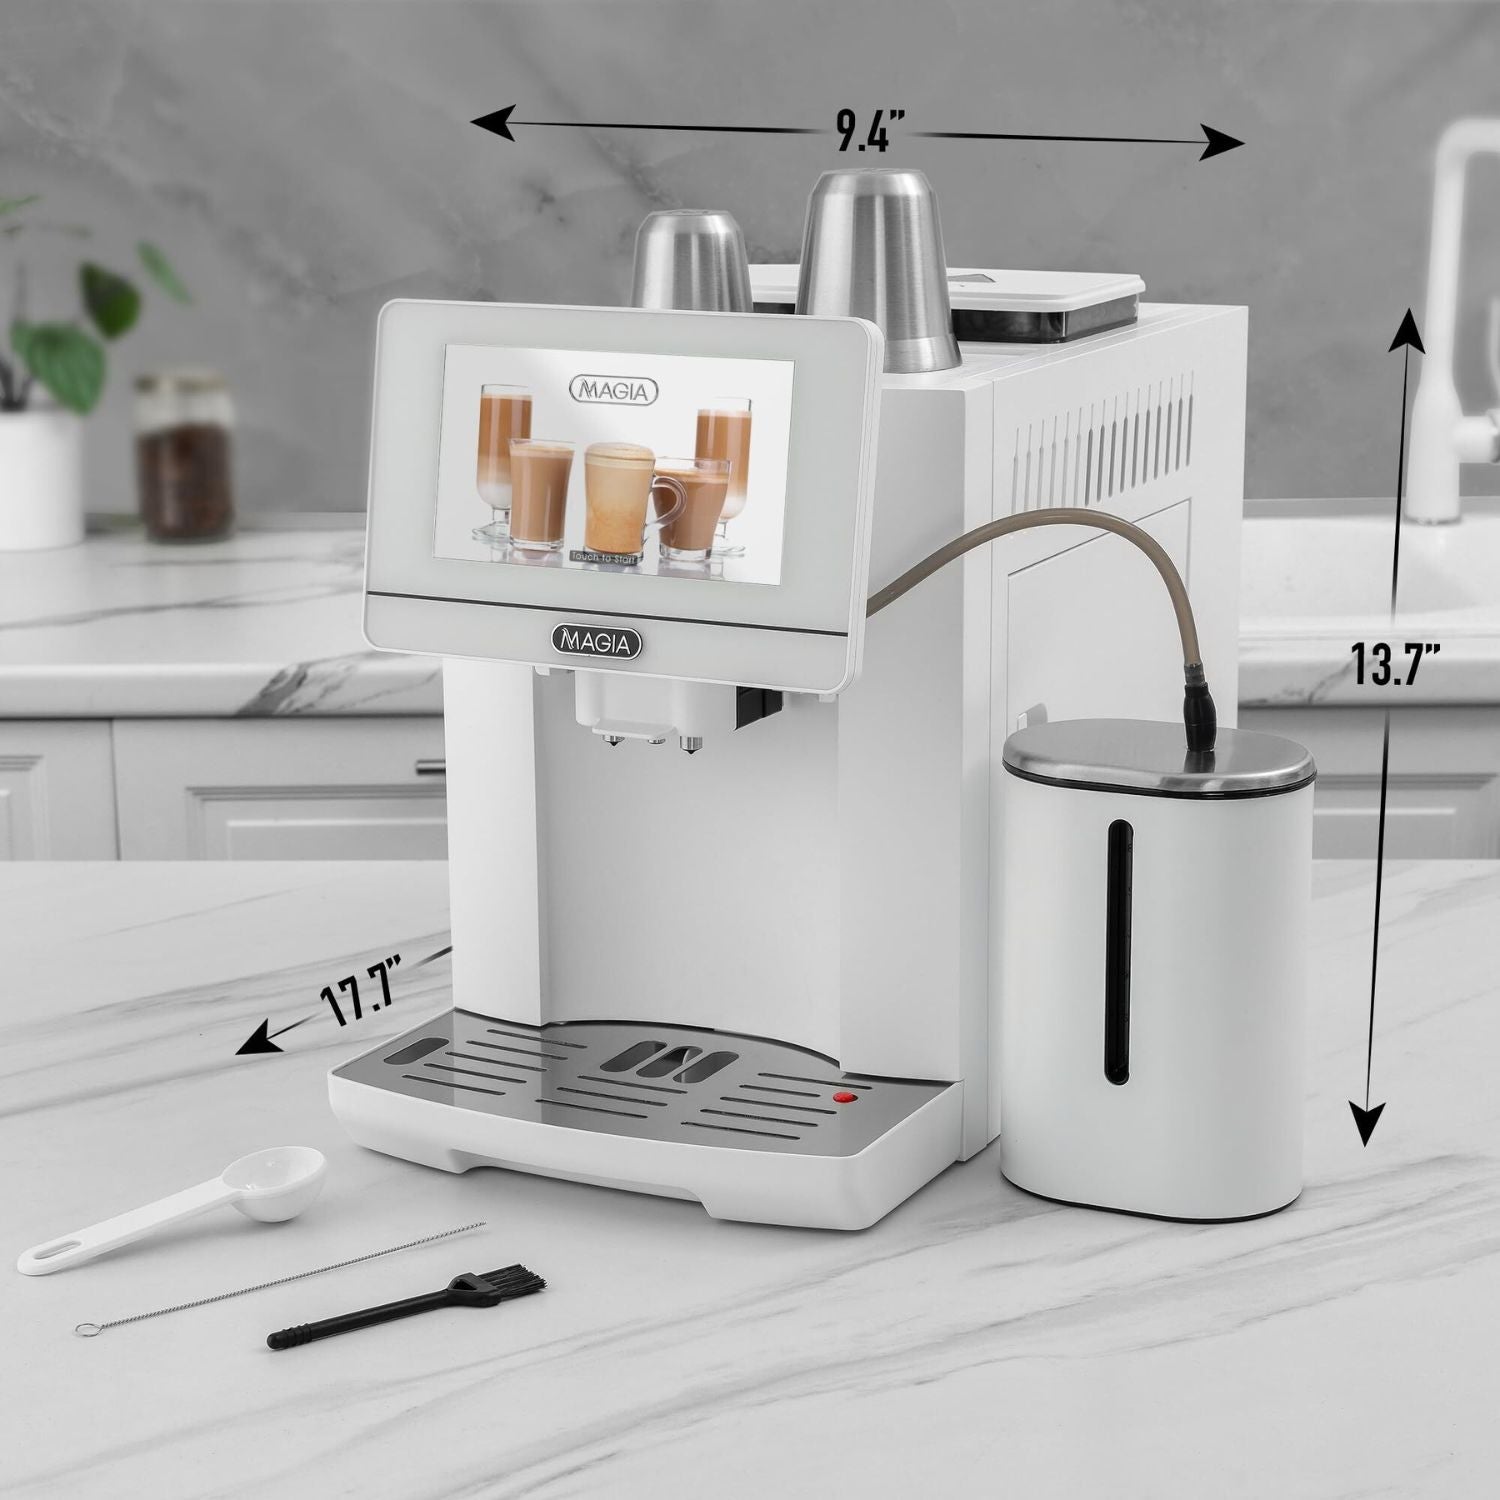 Zulay Kitchen White Magia Automatic Espresso Coffee Machine